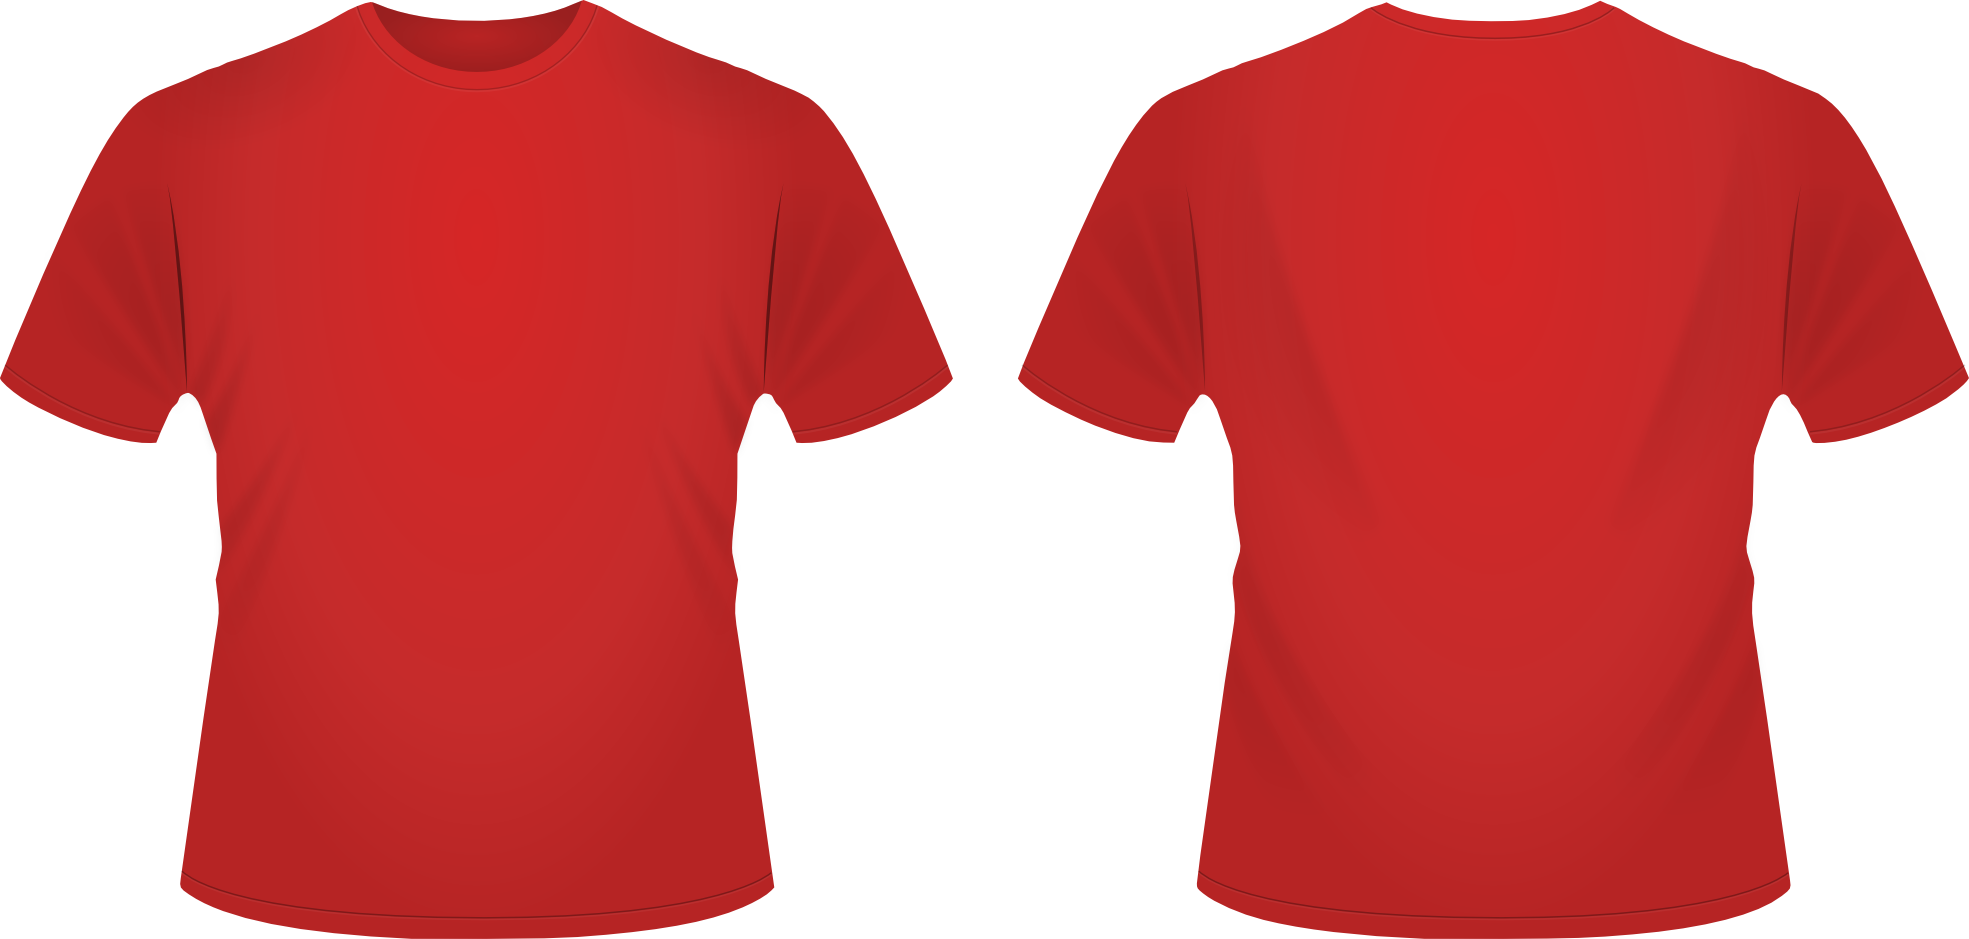 Download Template Kaos Merah Maroon Desain Kaos Menarik PSD Mockup Templates